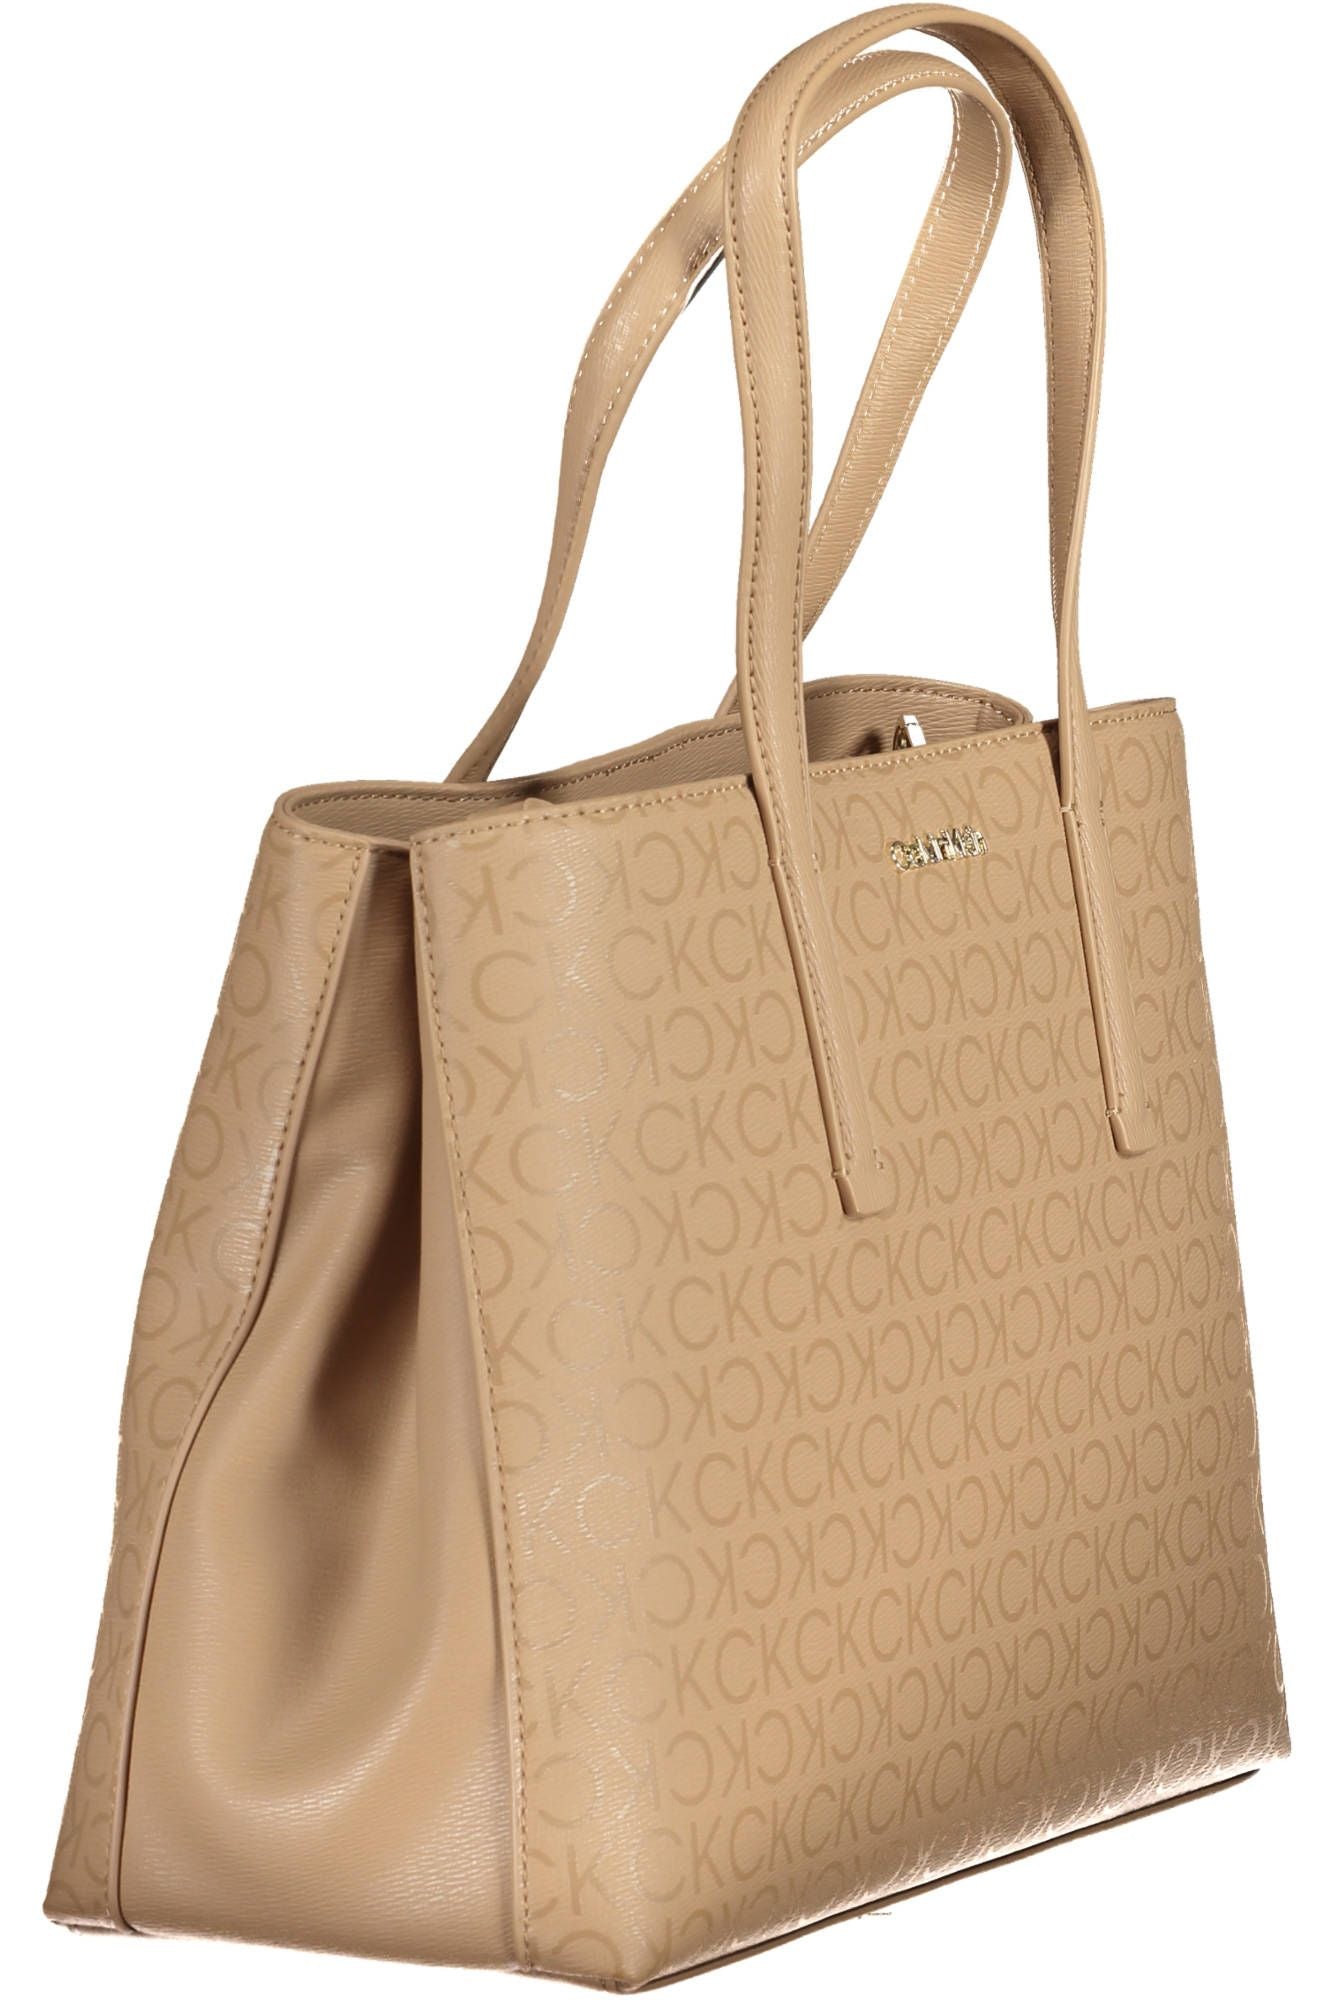 Eco-Chic Beige Handbag with Modern Flair